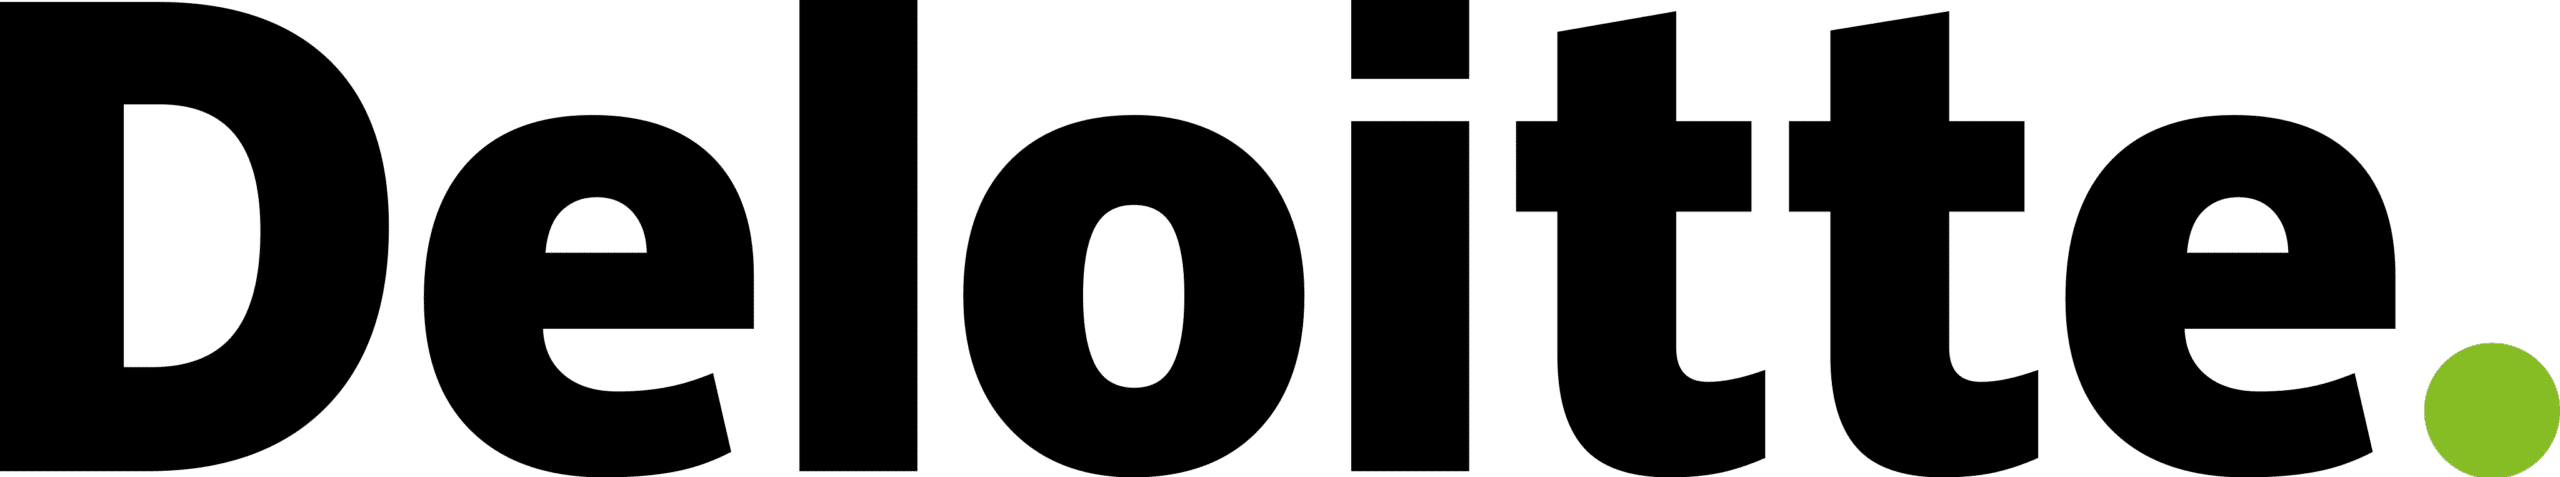 deloitte logo by Interactive Entertainment Group, Inc.